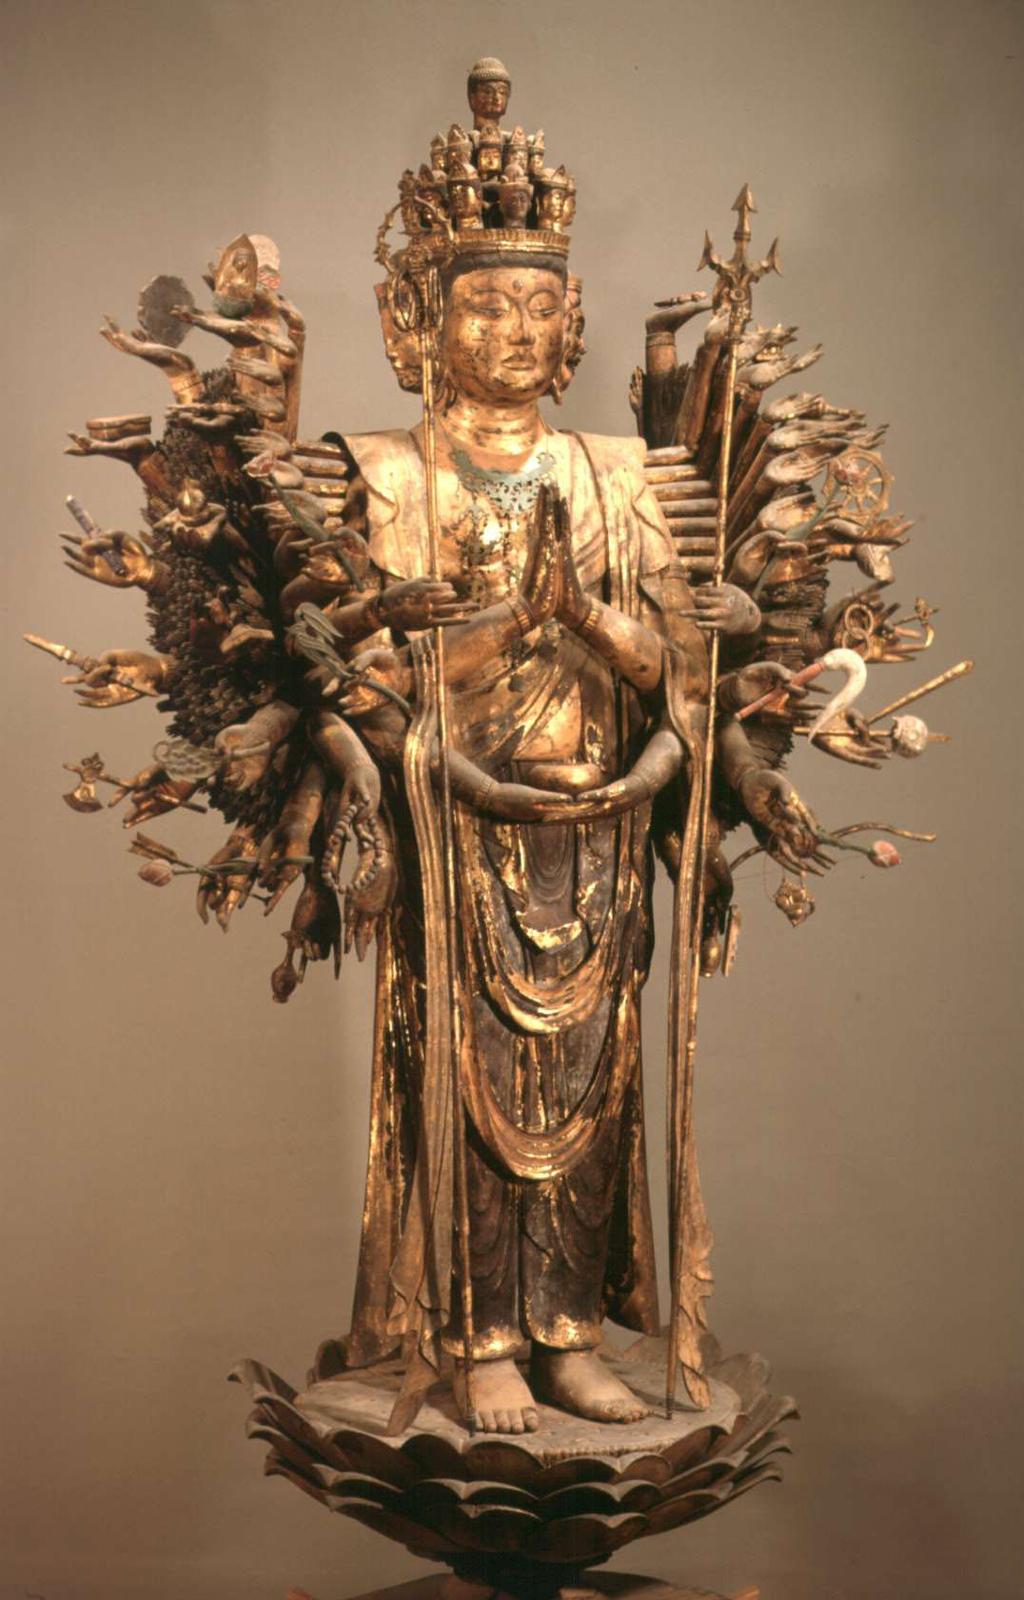 The Bodhisattva Guan-Yin/Kannon is originally